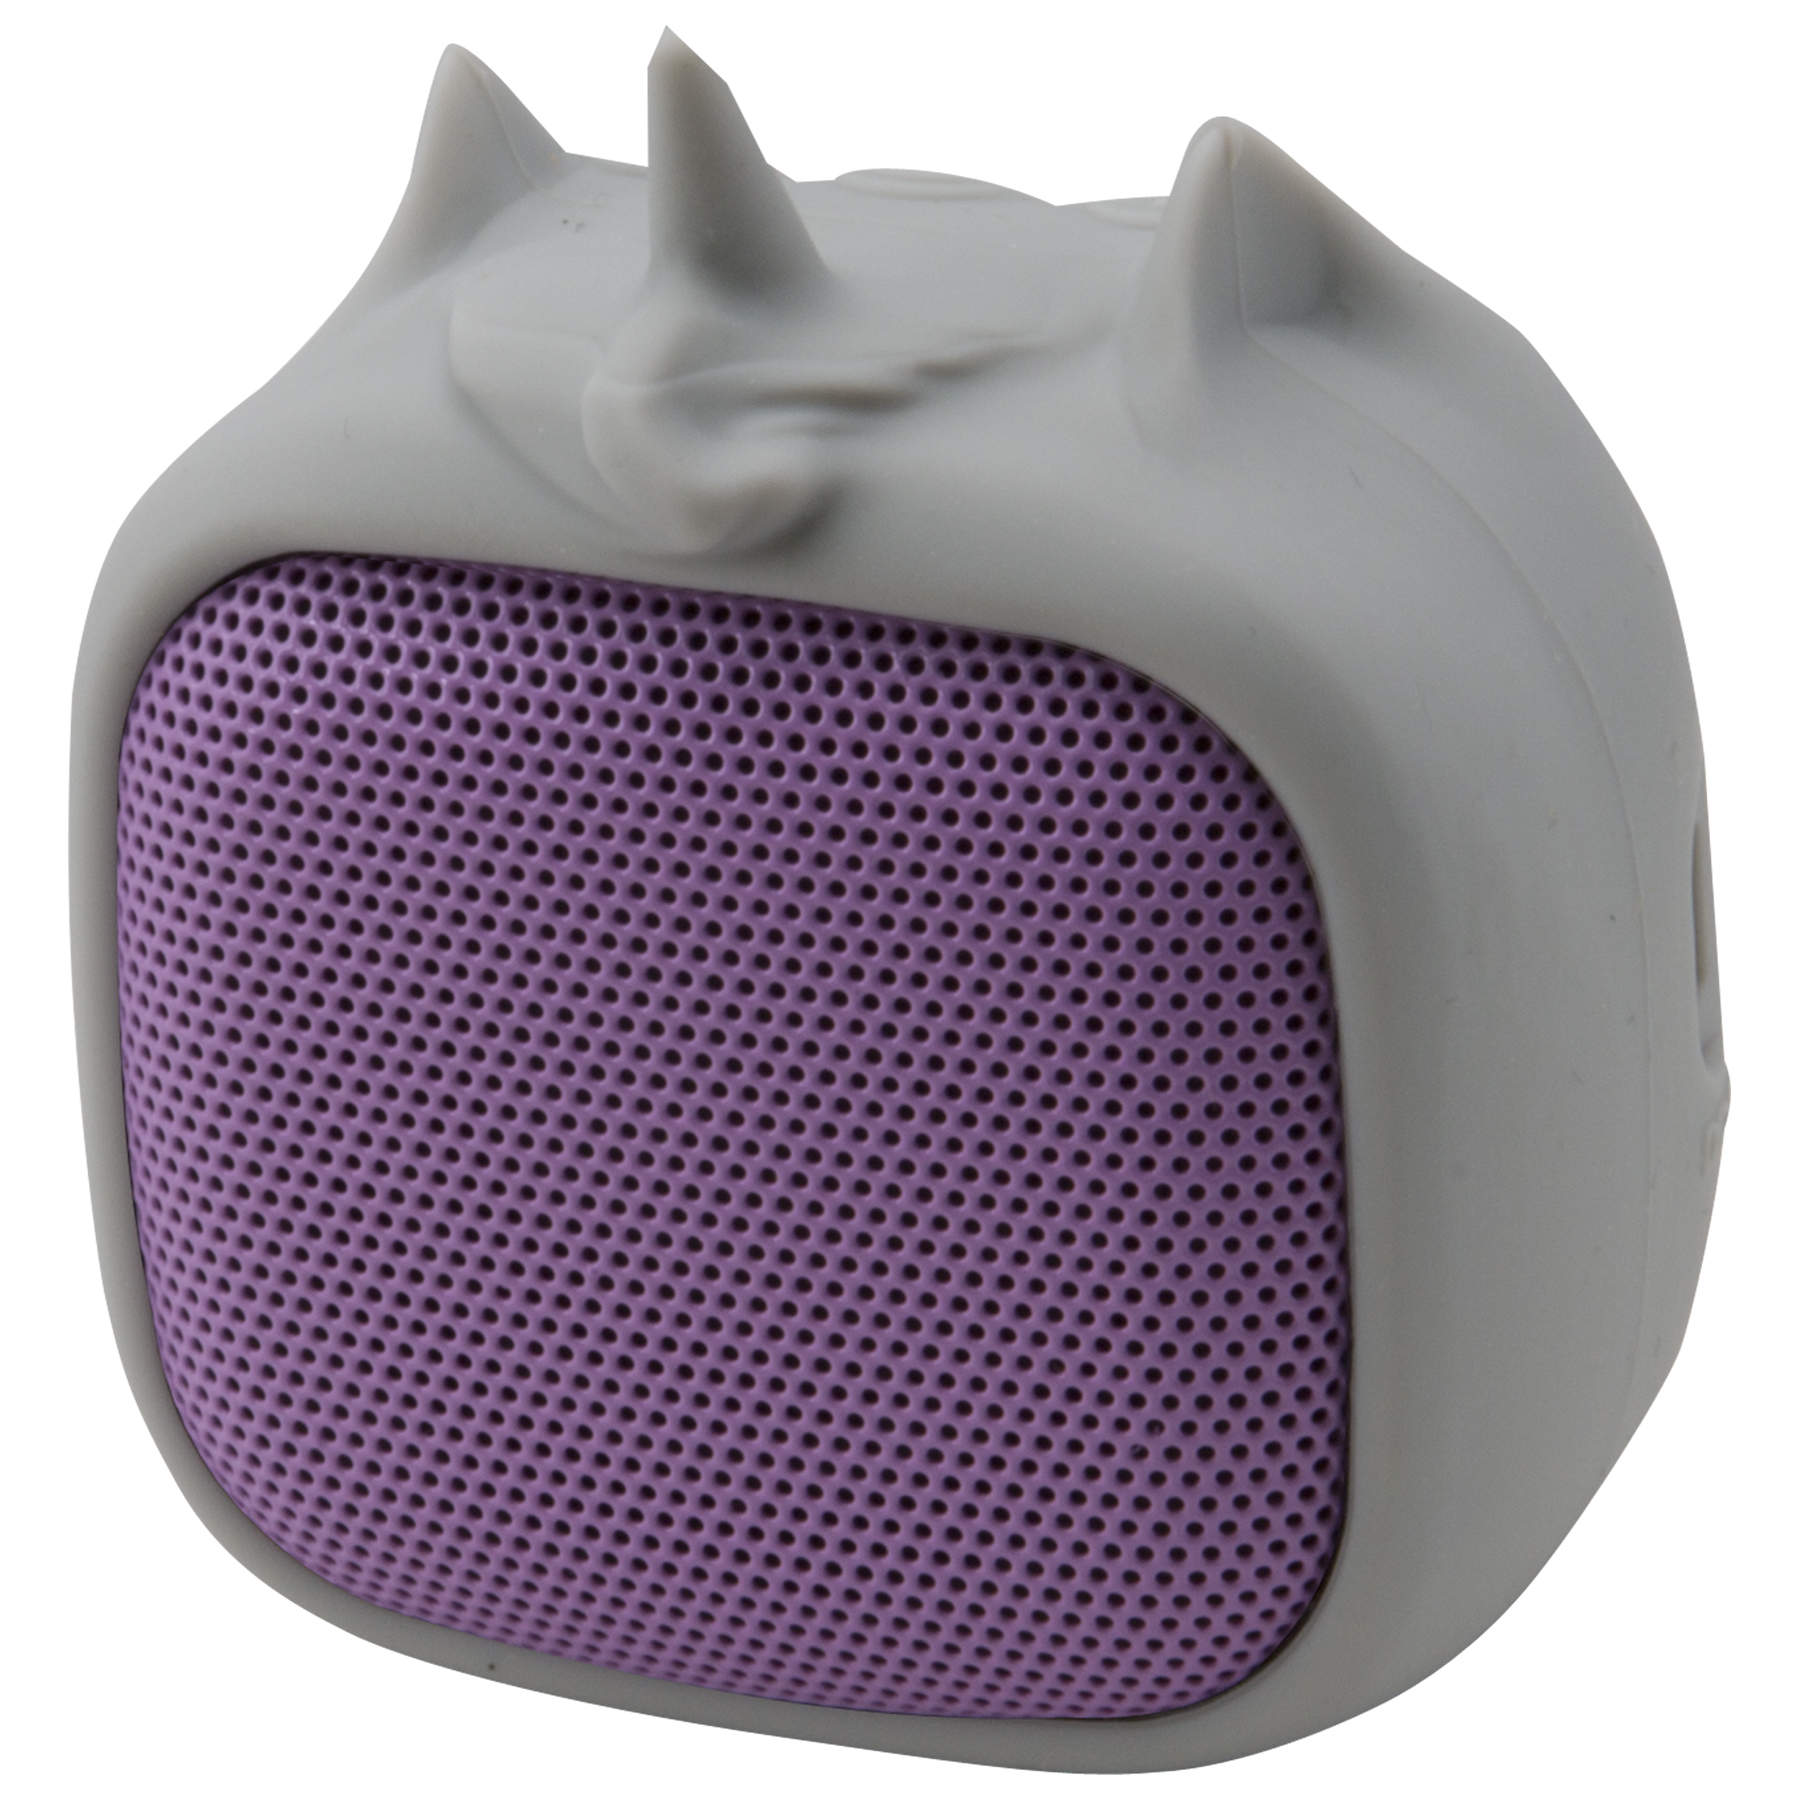 iLive Bluetooth Wild Tailz Unicorn Wireless Speaker, Rechargeable, Grey/Purple, ISB19UNI - image 5 of 5